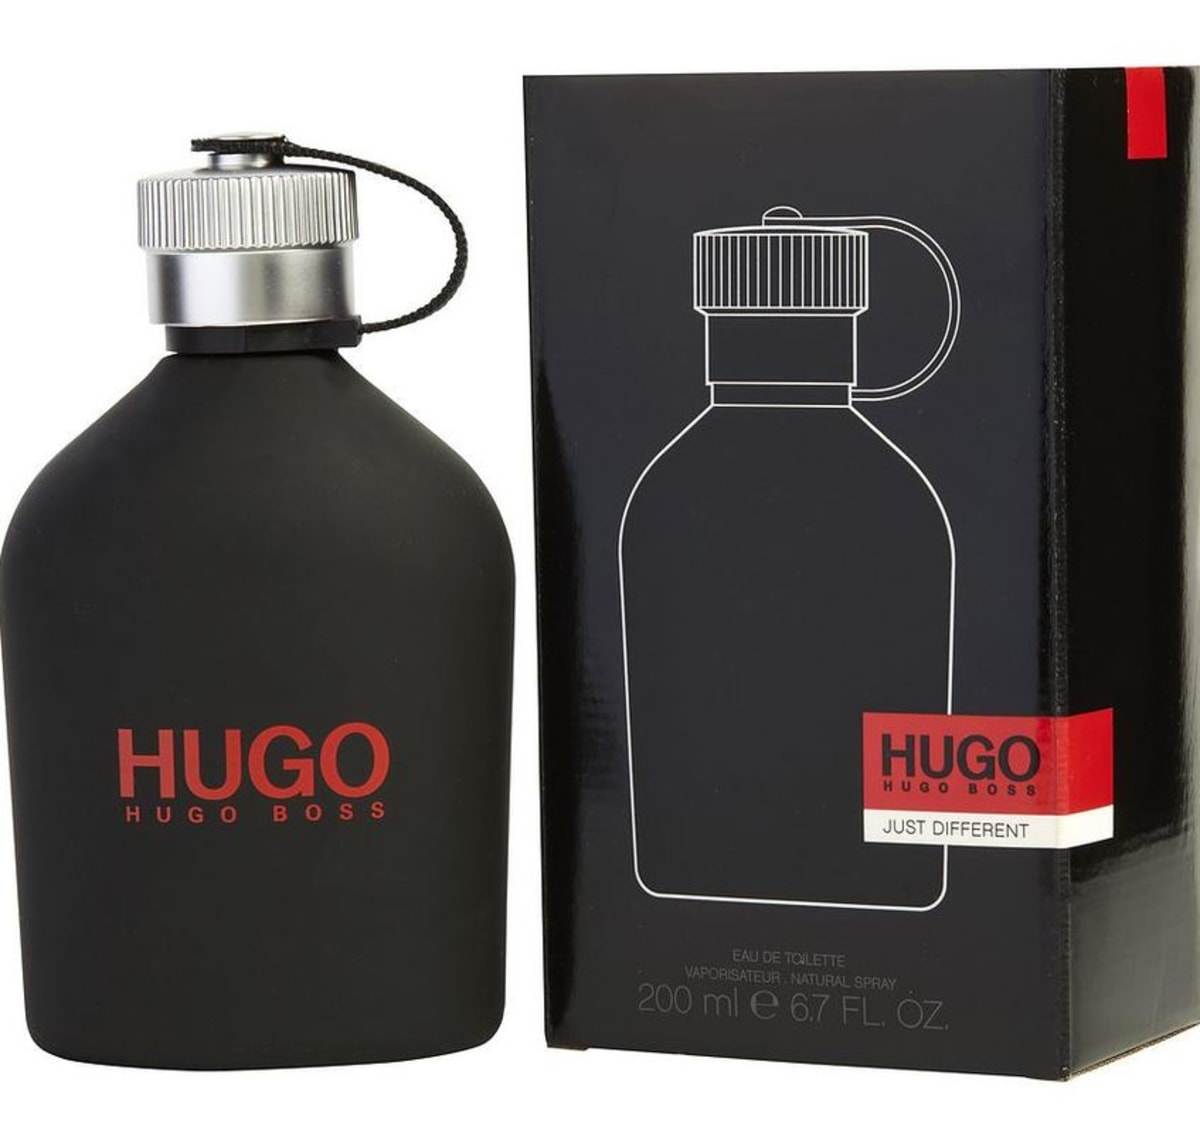 Just Different - Hugo Boss - 200 ml - edt